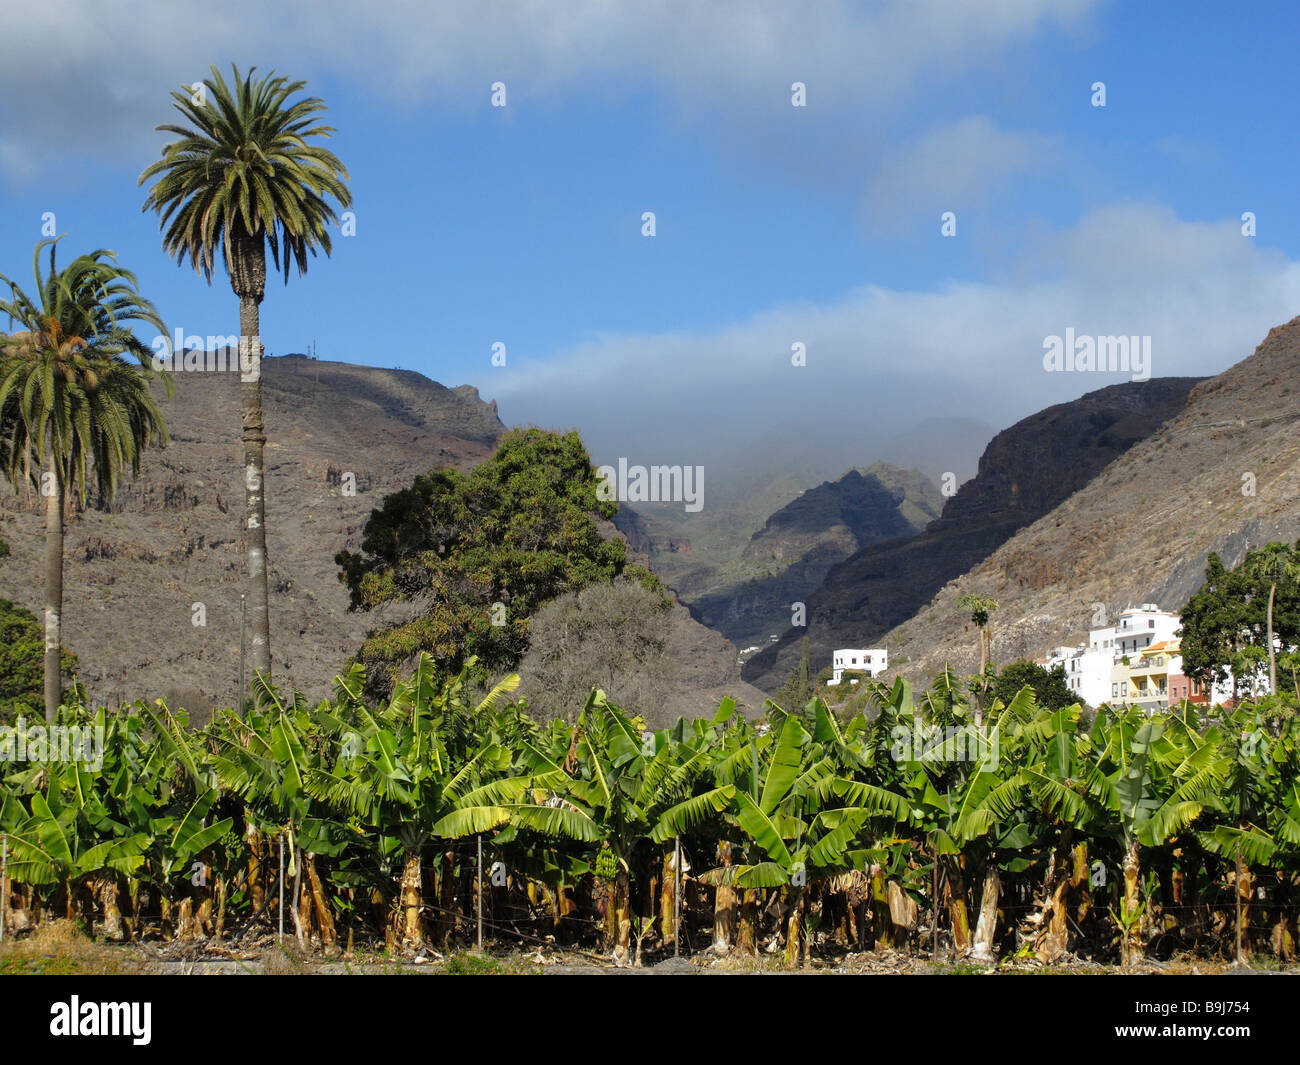 Banana plantation and date palms, Playa de Santiago, La Gomera, Canaries, Canary Islands, Spain, Europe Stock Photo